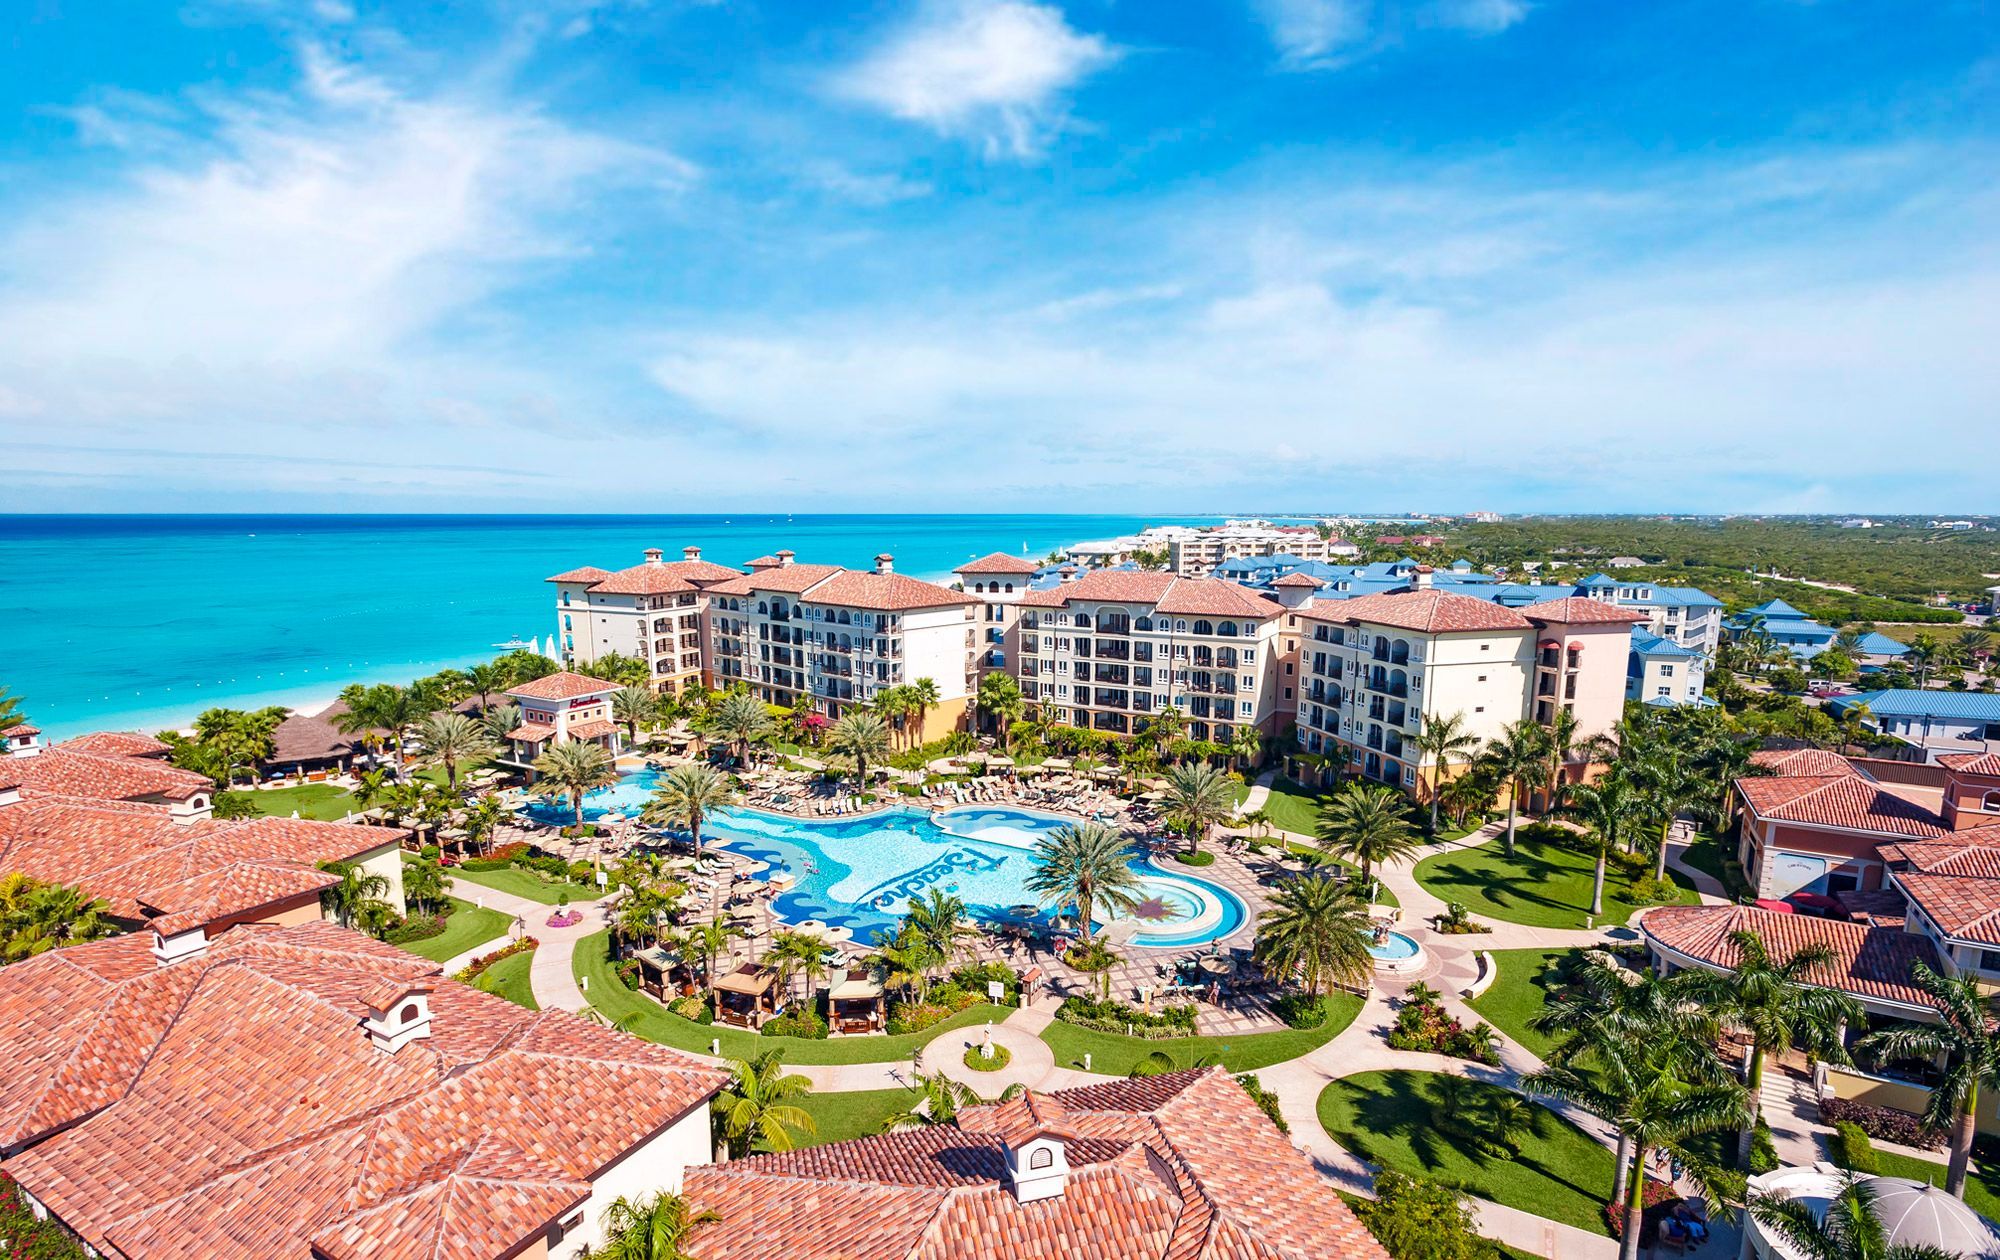 BEACHES® Turks & Caicos: 5 All-Inclusive Resorts In 1